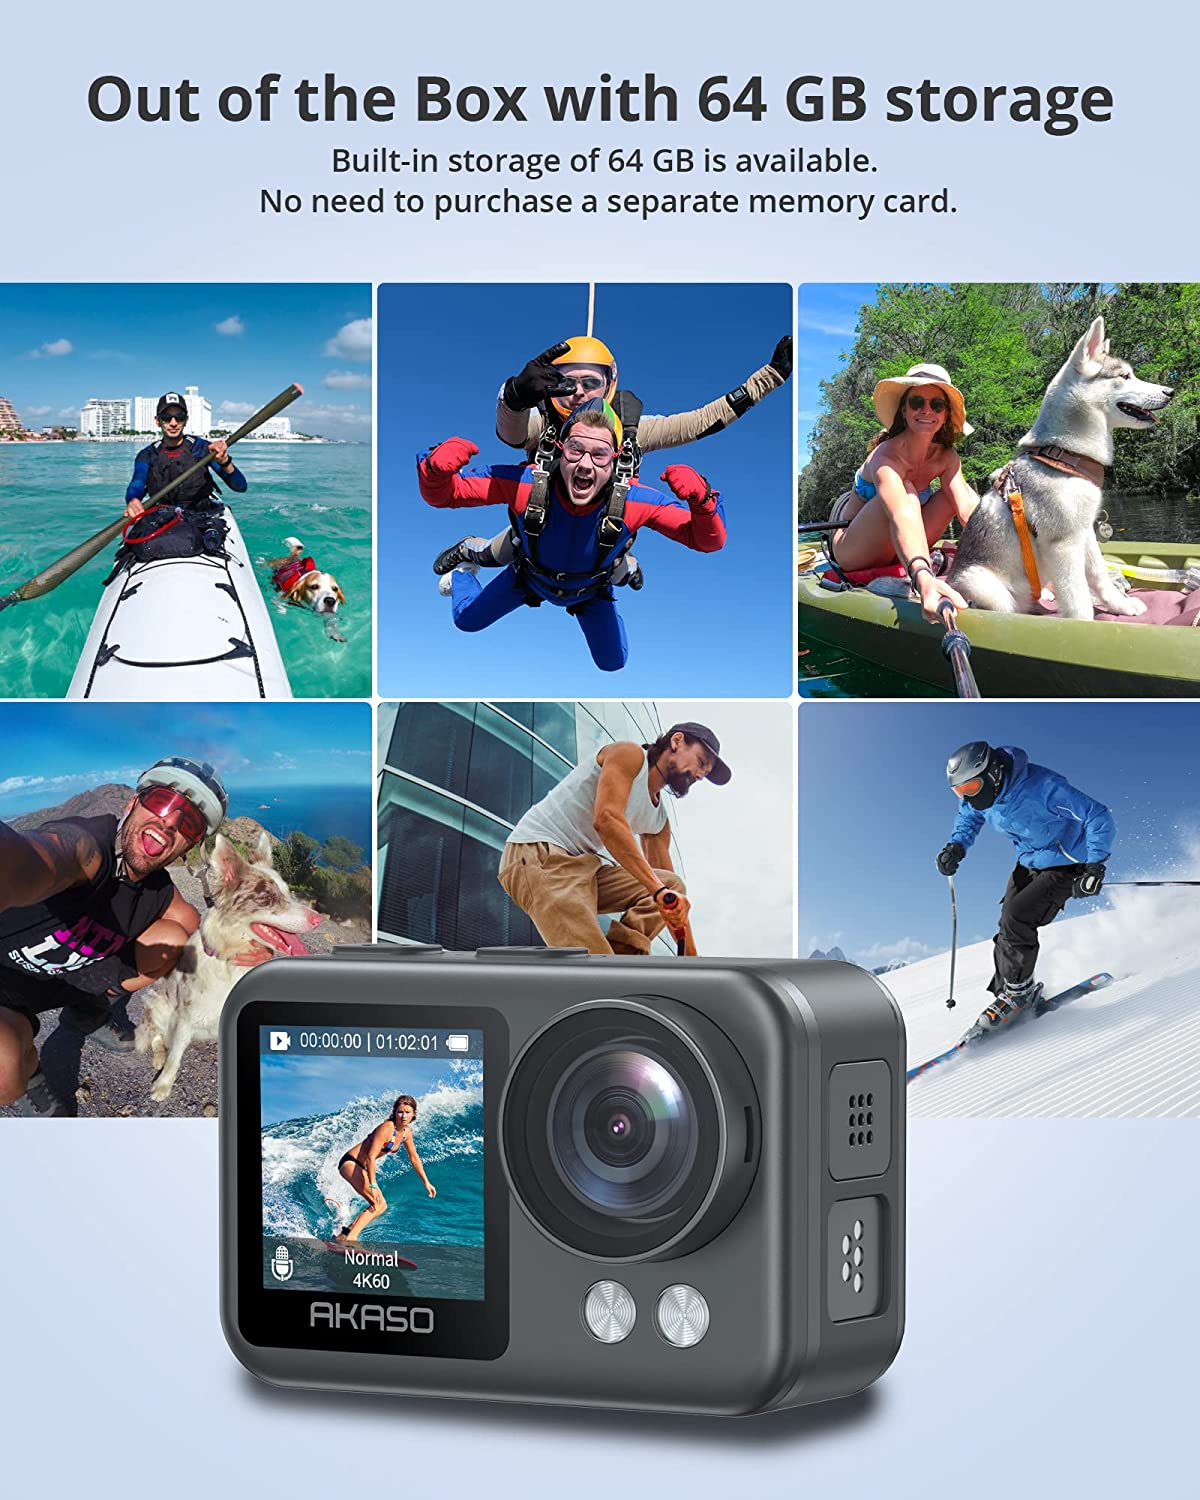 Buy AKASO Brave 4 Elite 4K60fps 20MP Ultra HD Action Camera